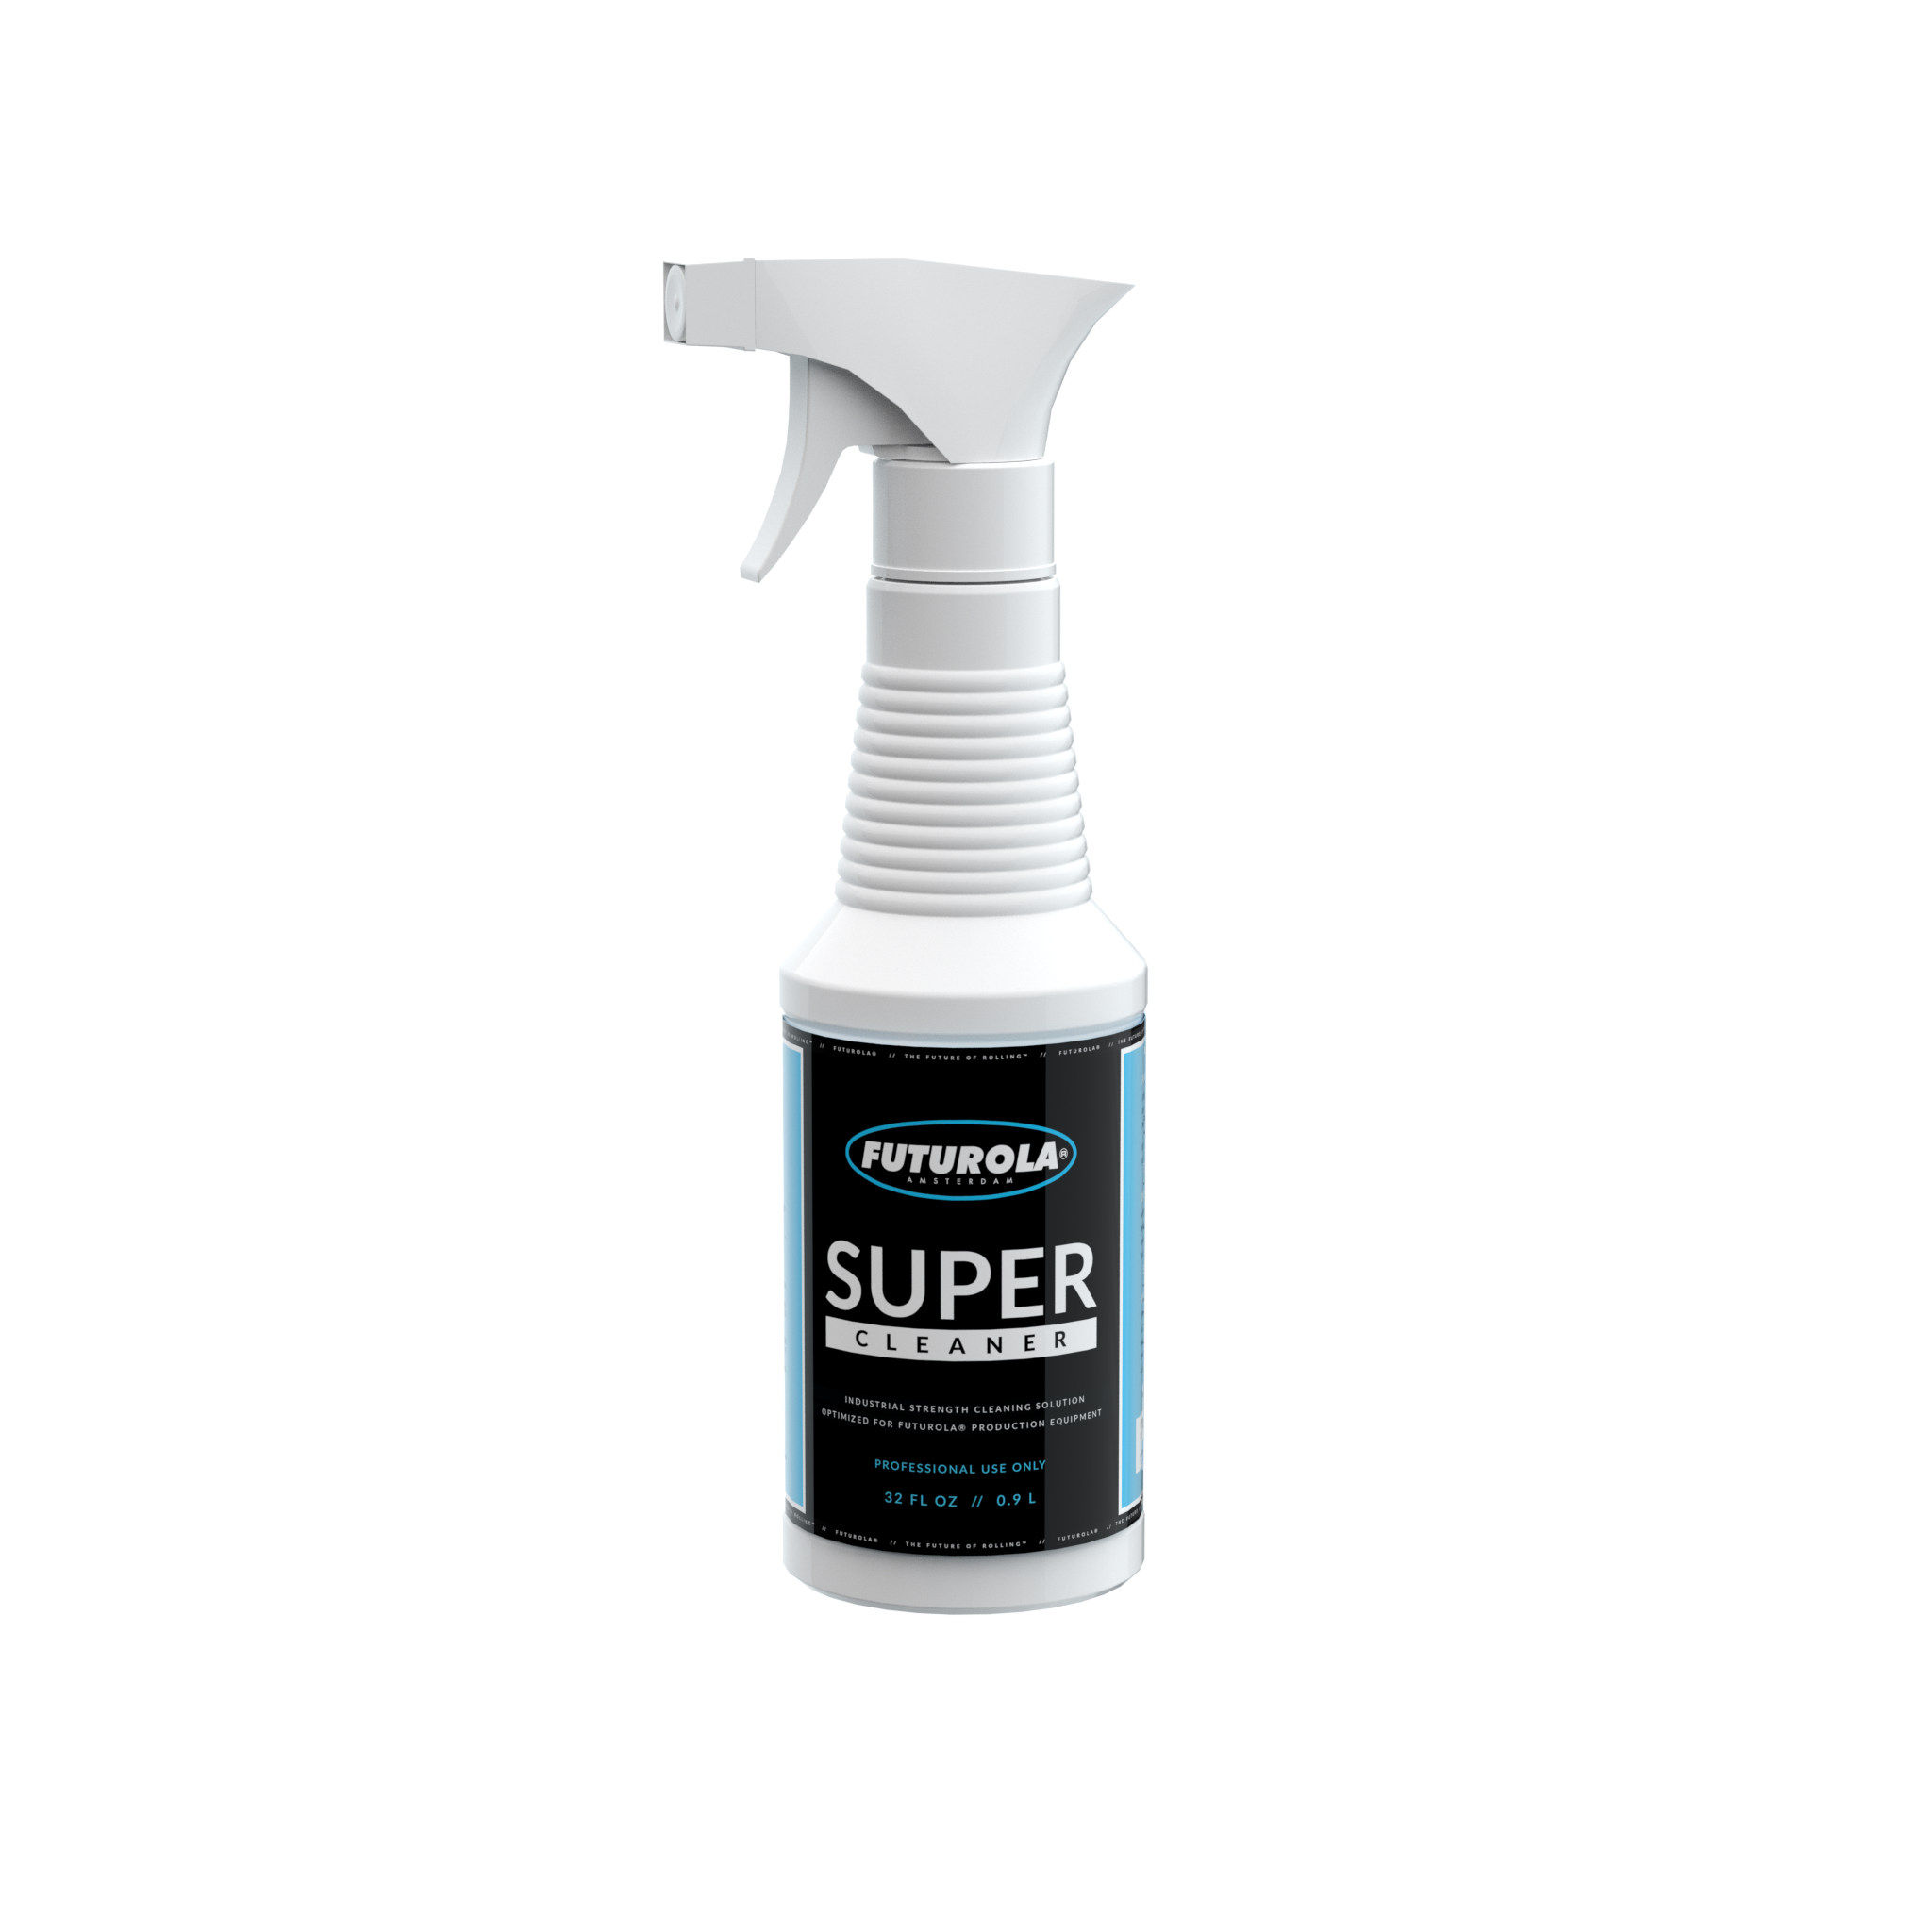 SUPER CLEANER [Wholesale] - FUTUROLA